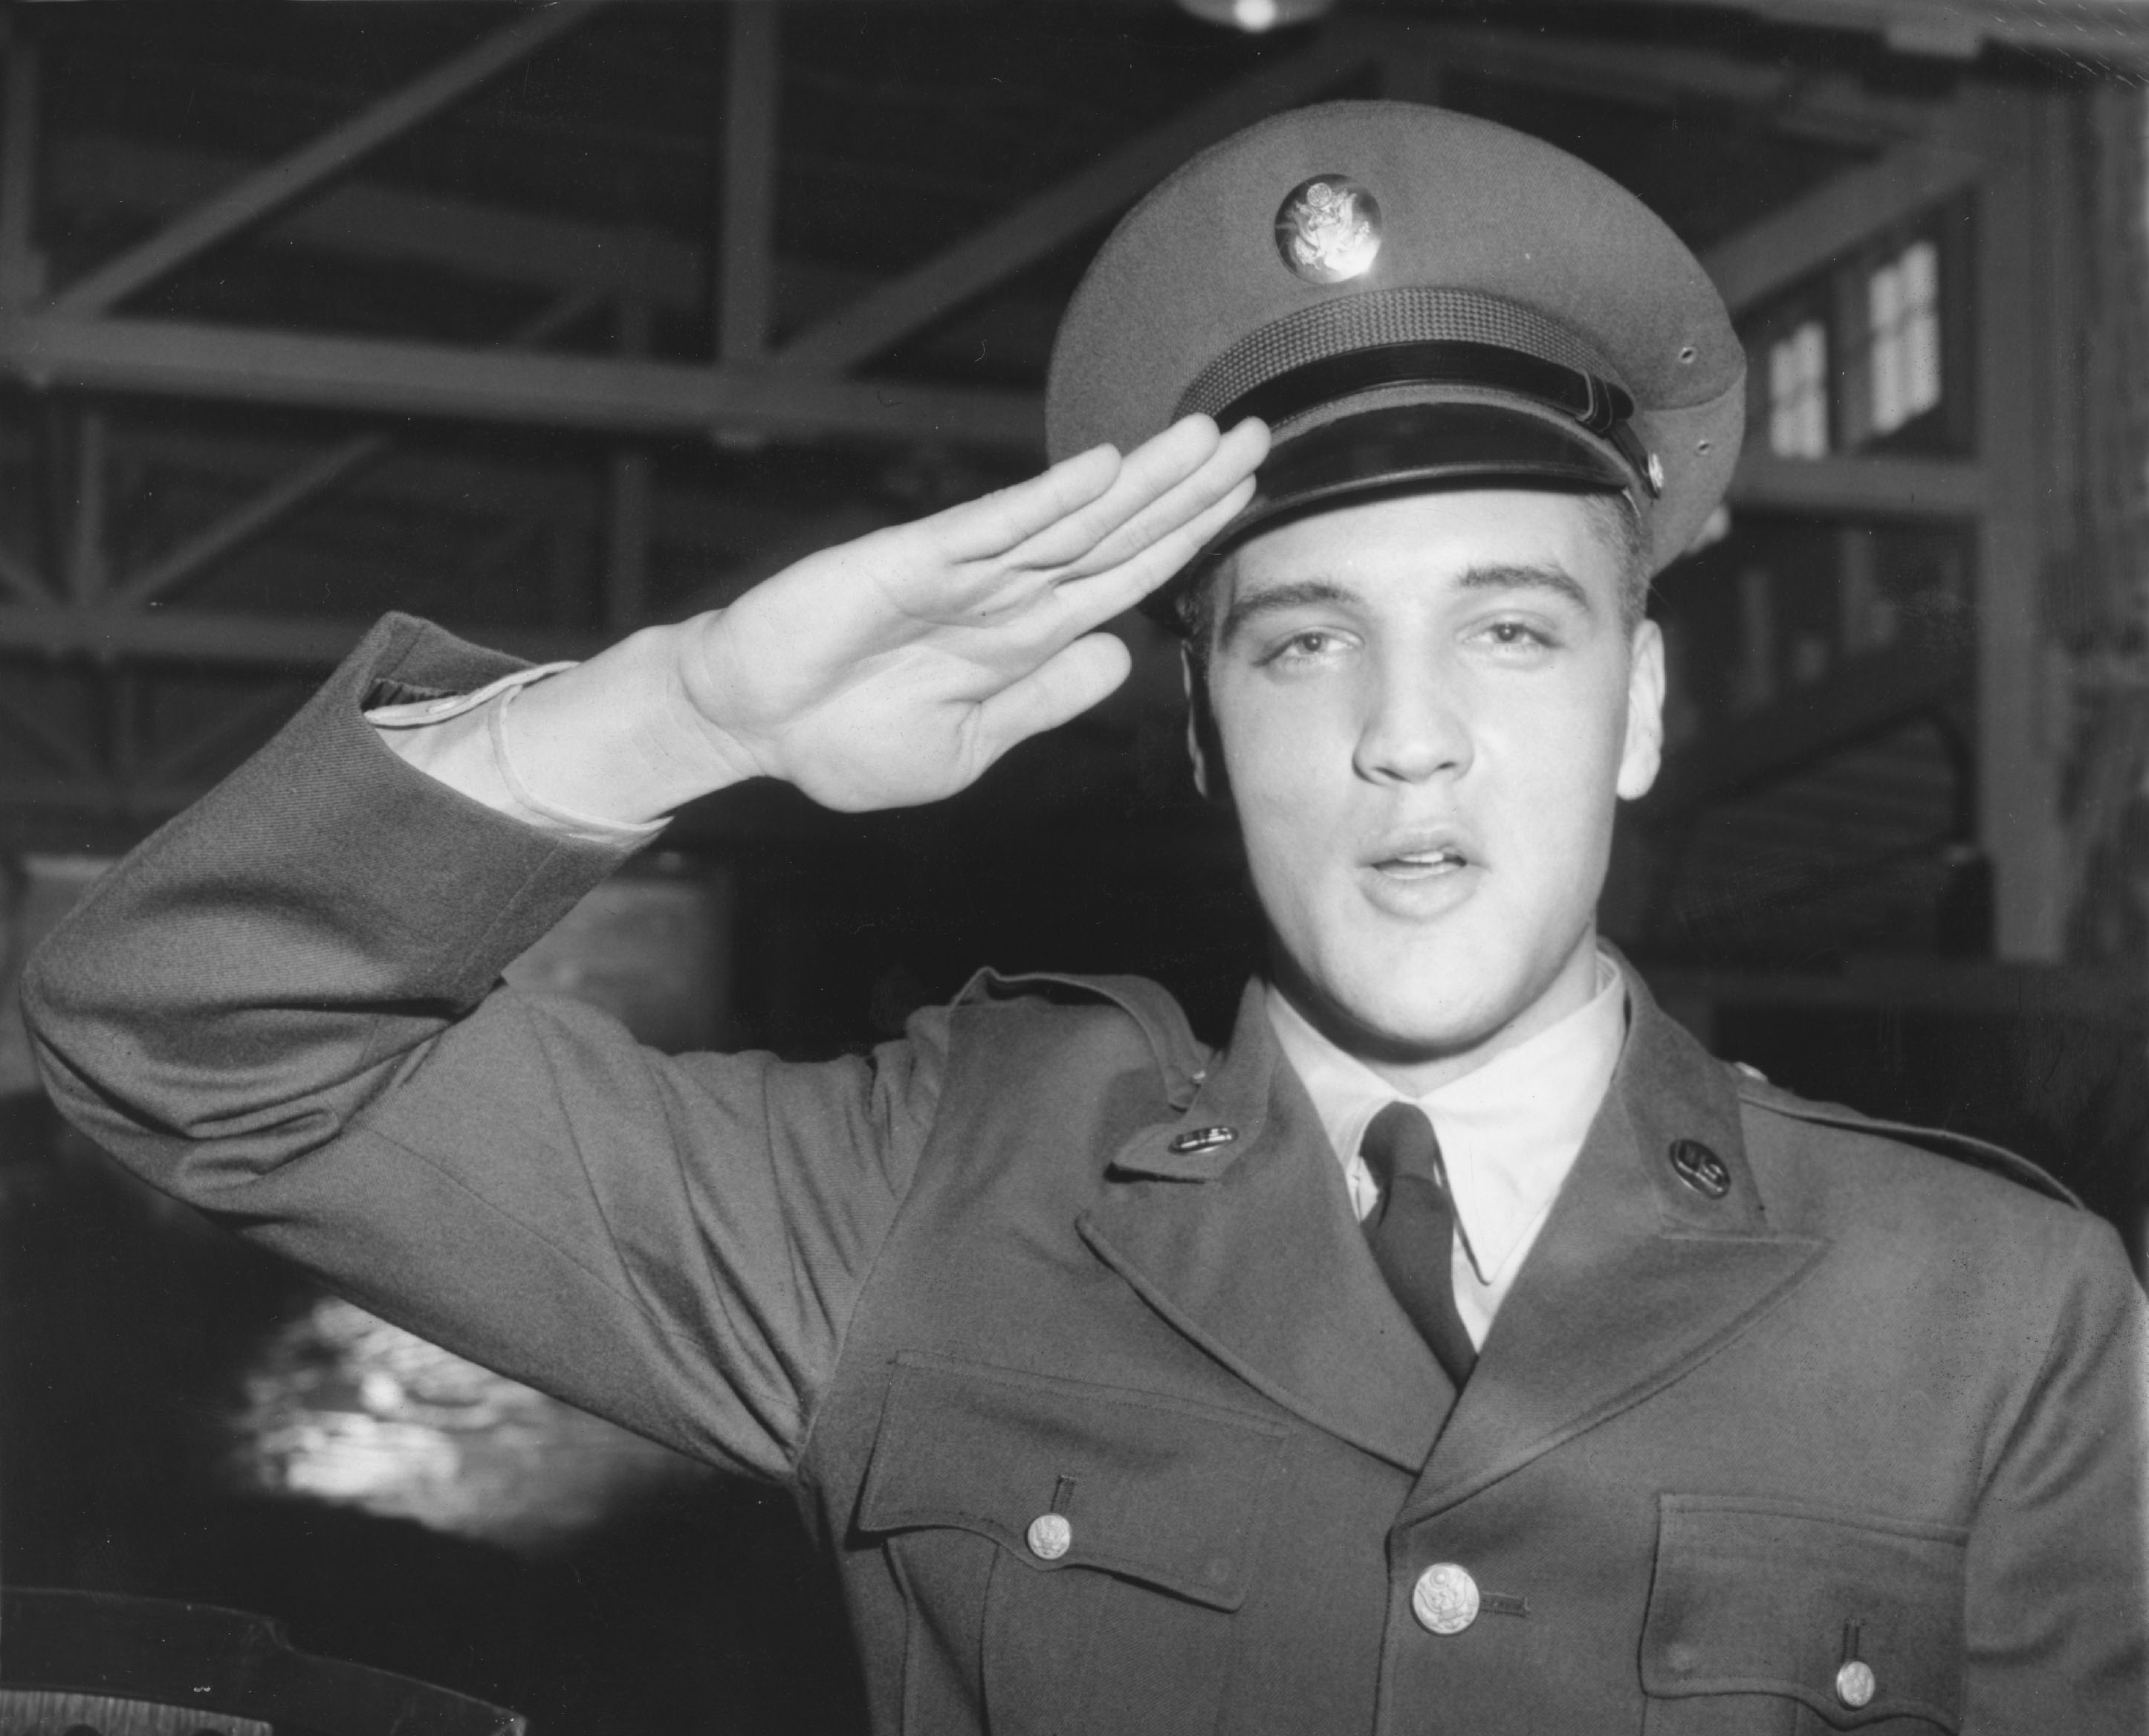 Closeup of Elvis saluting